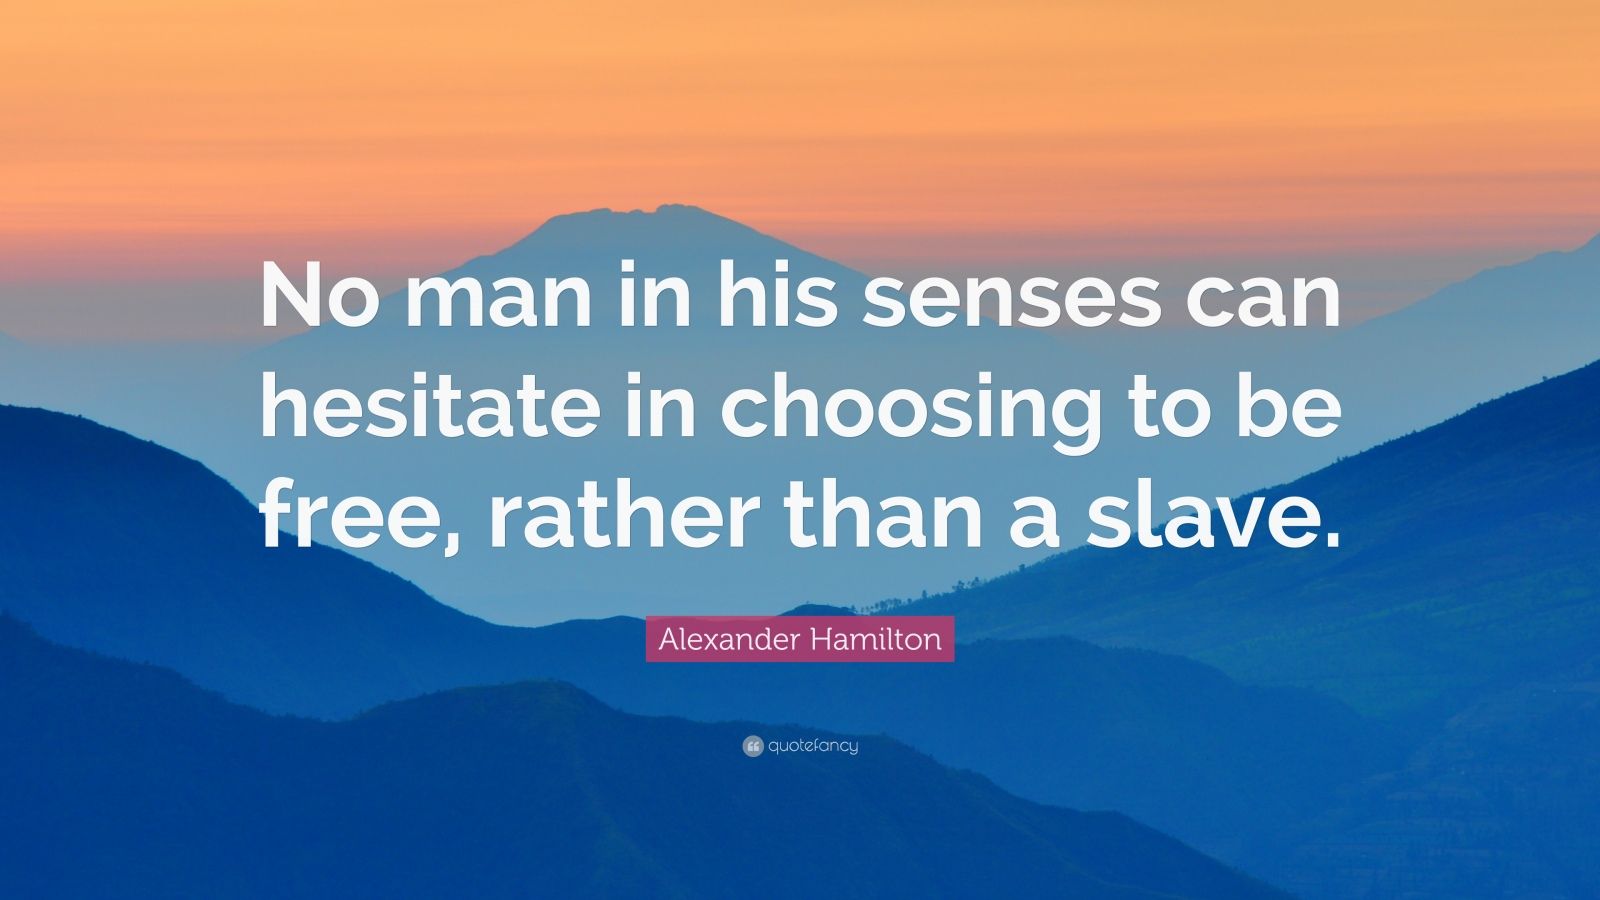 Alexander Hamilton Quote: “No man in his senses can hesitate in ...